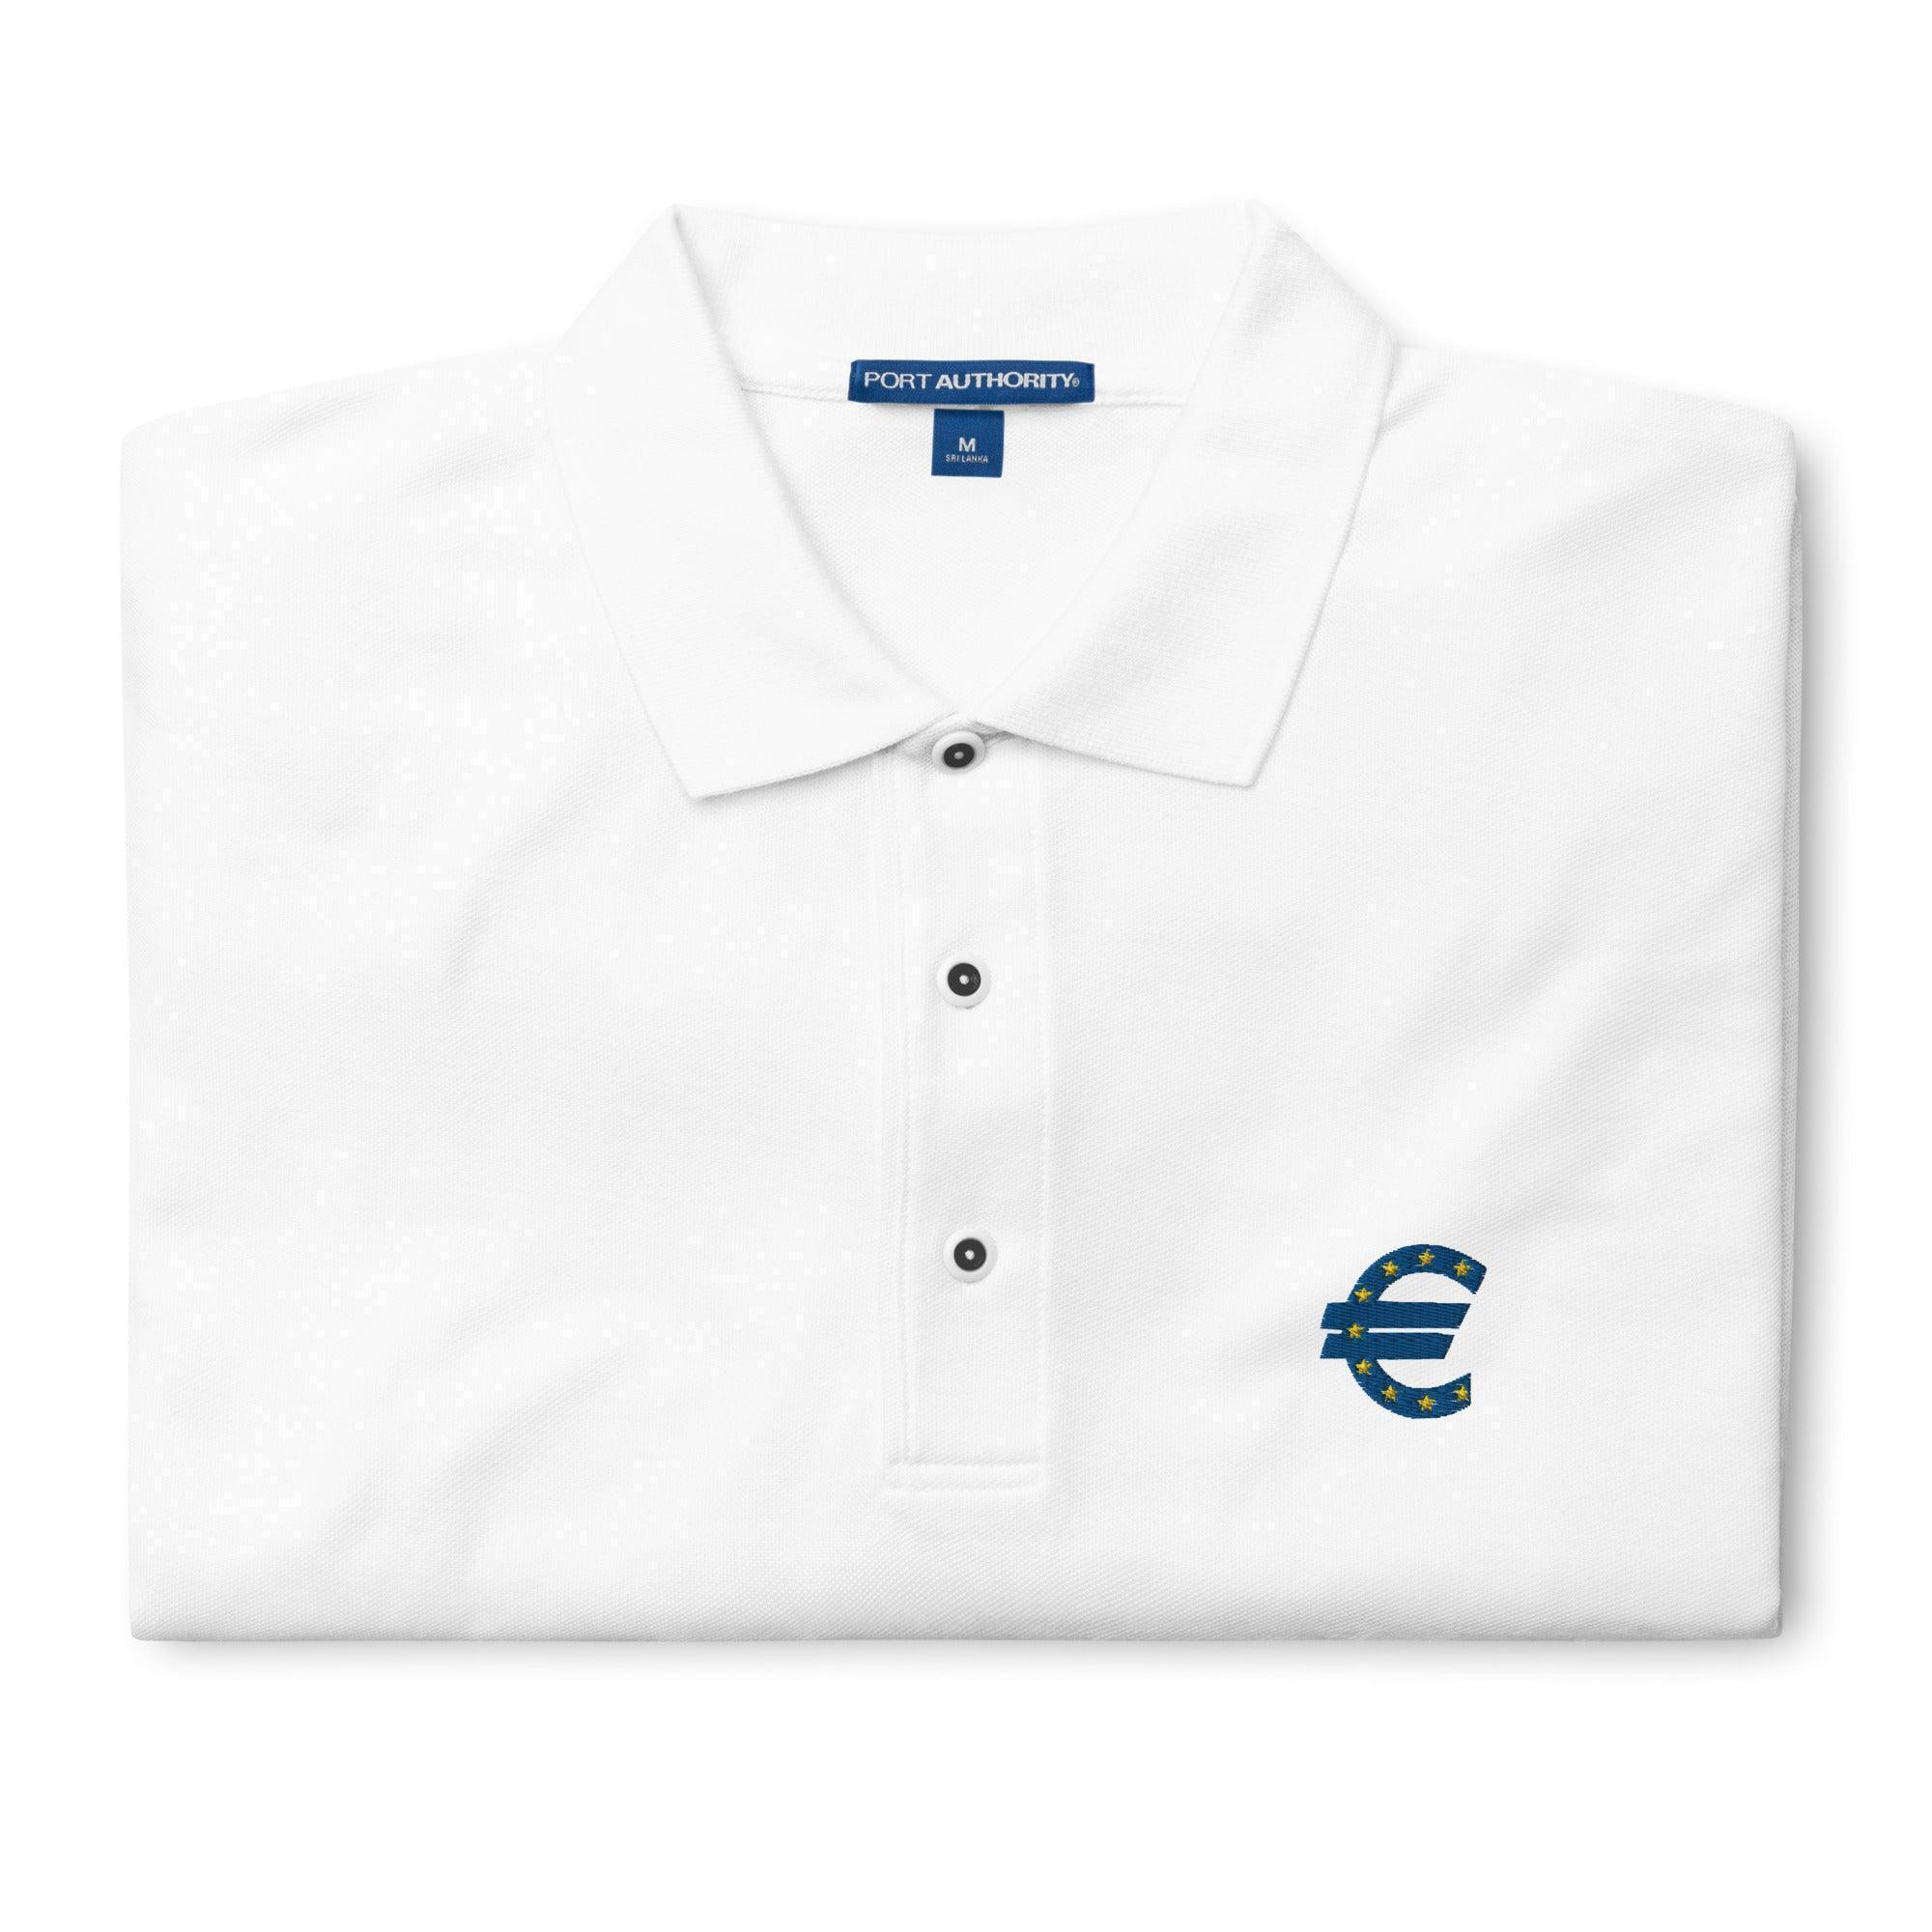 The Euro Polo Shirt - InvestmenTees